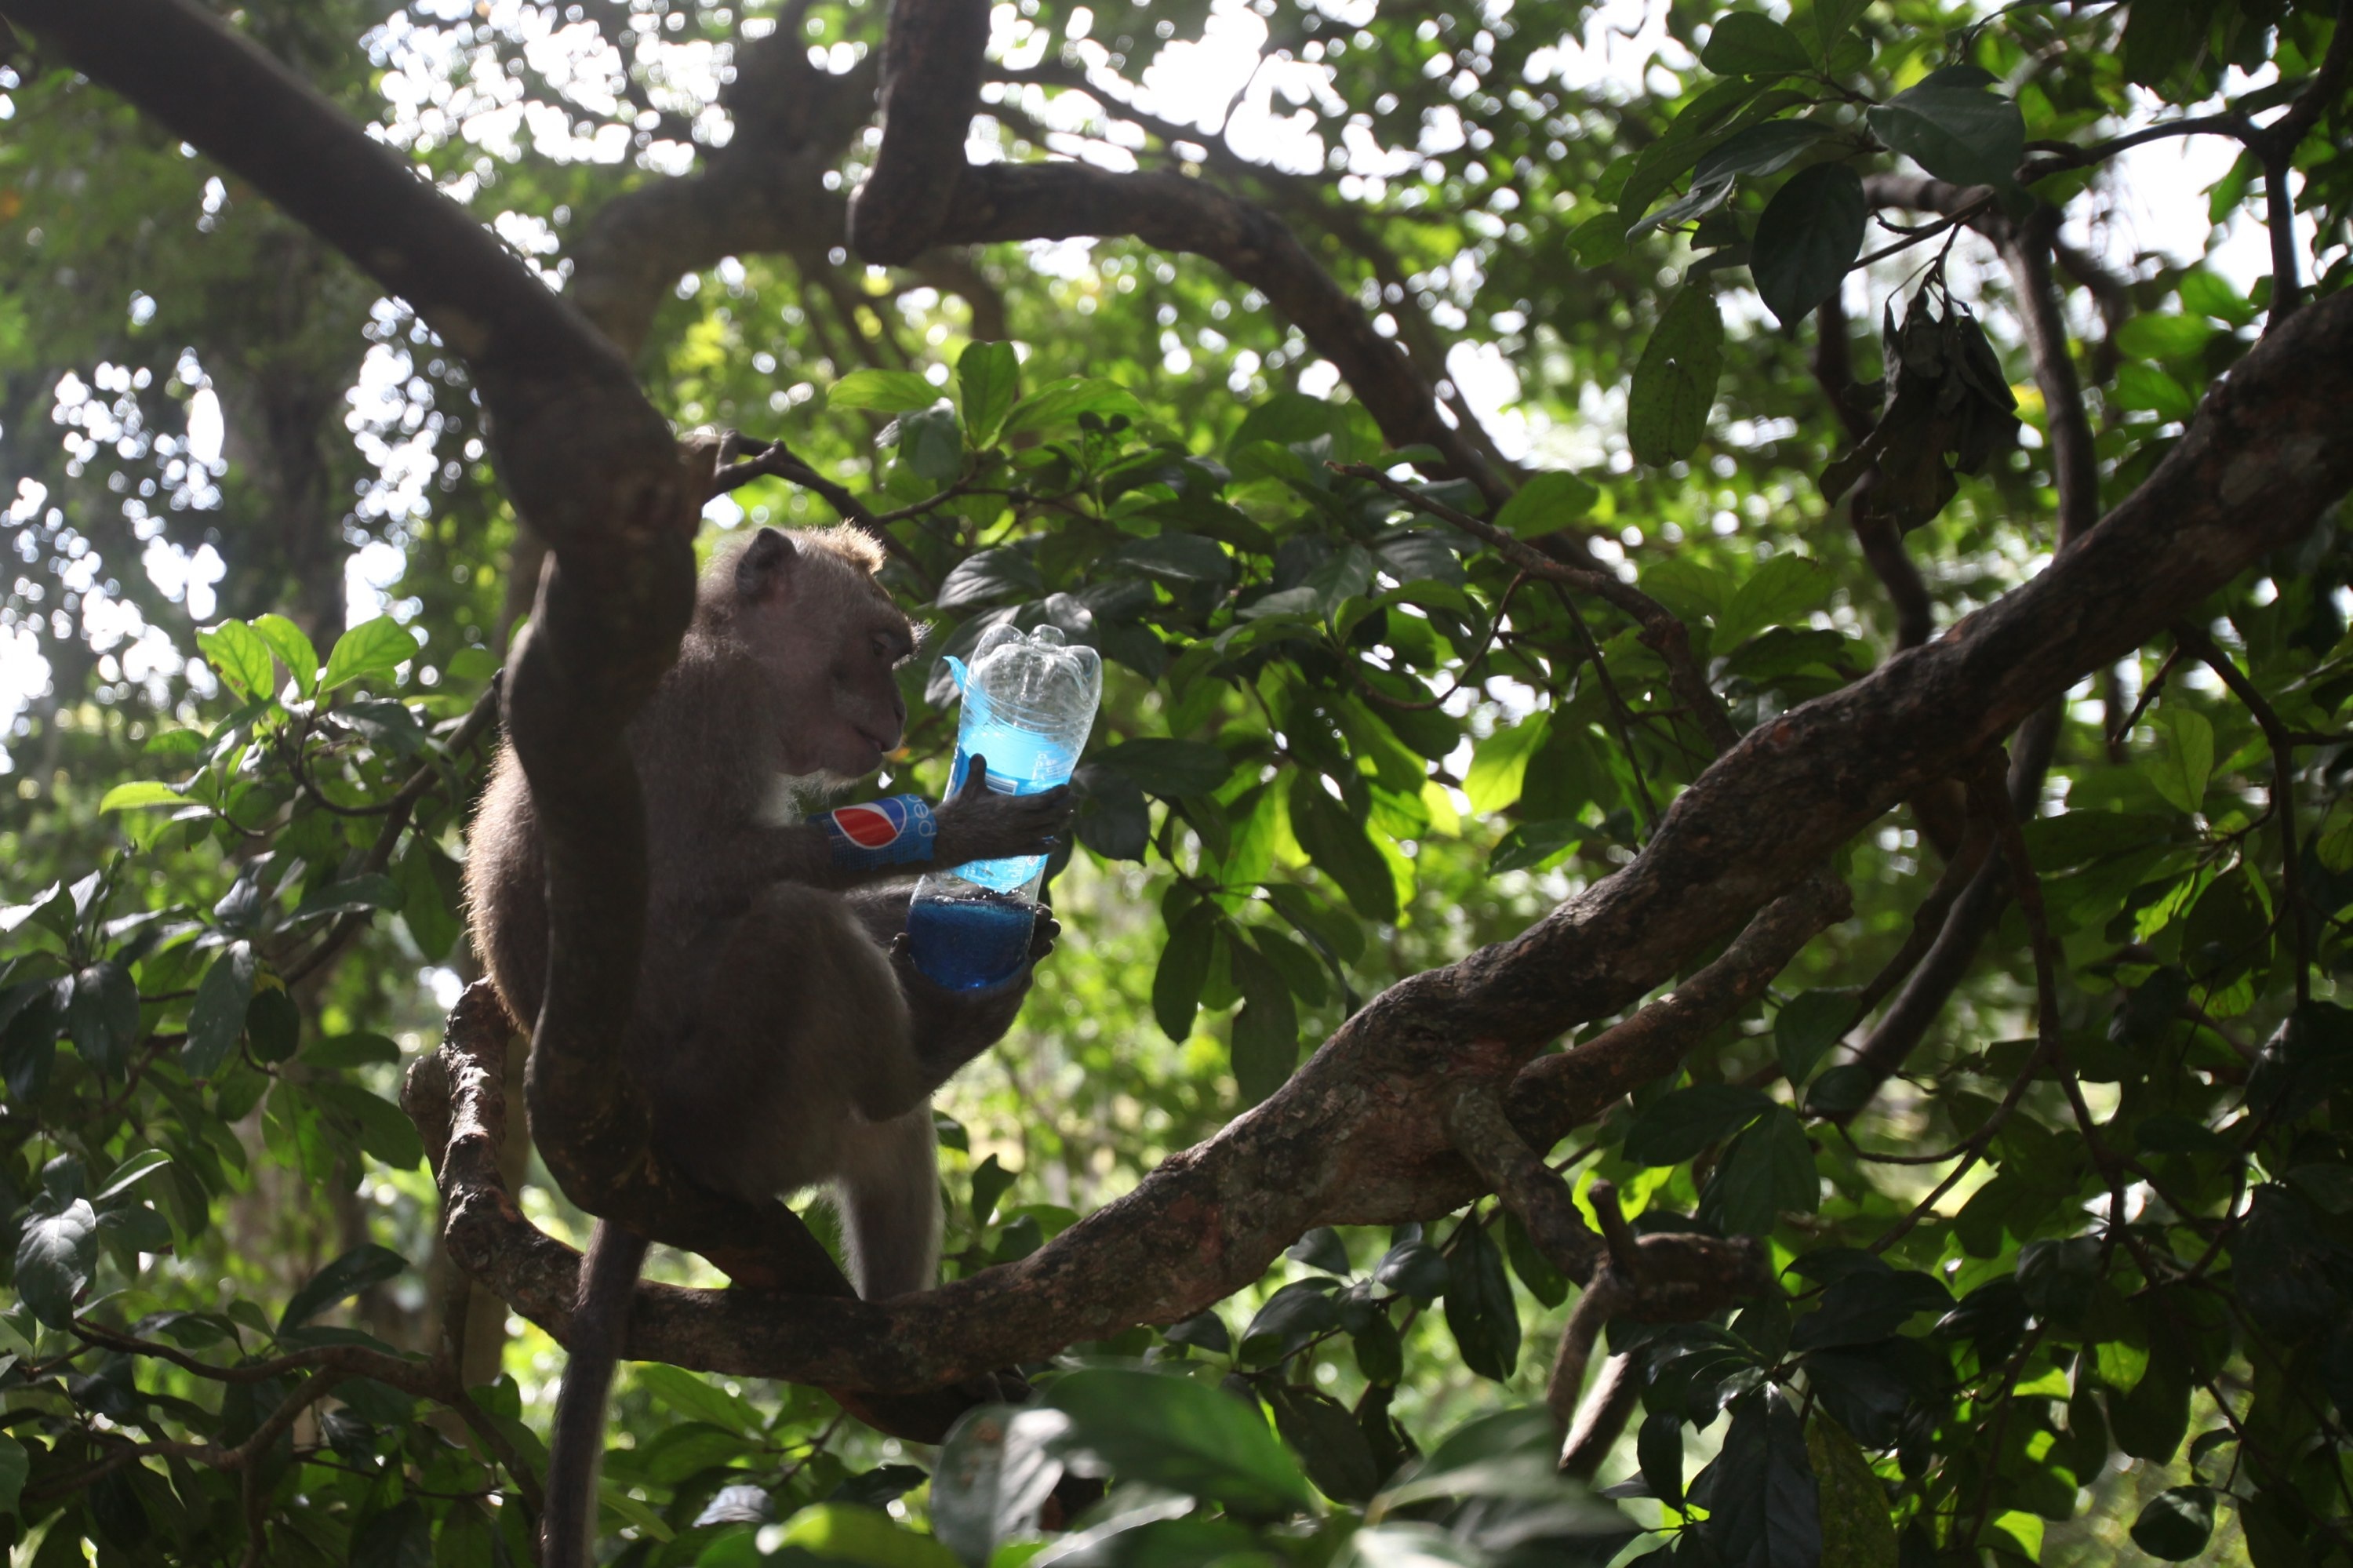 Фото древних статуй в городе обезьян где нет обезьян джунглей. Video r34 Monkey in Jungle with Laptop. Jungle monkeys